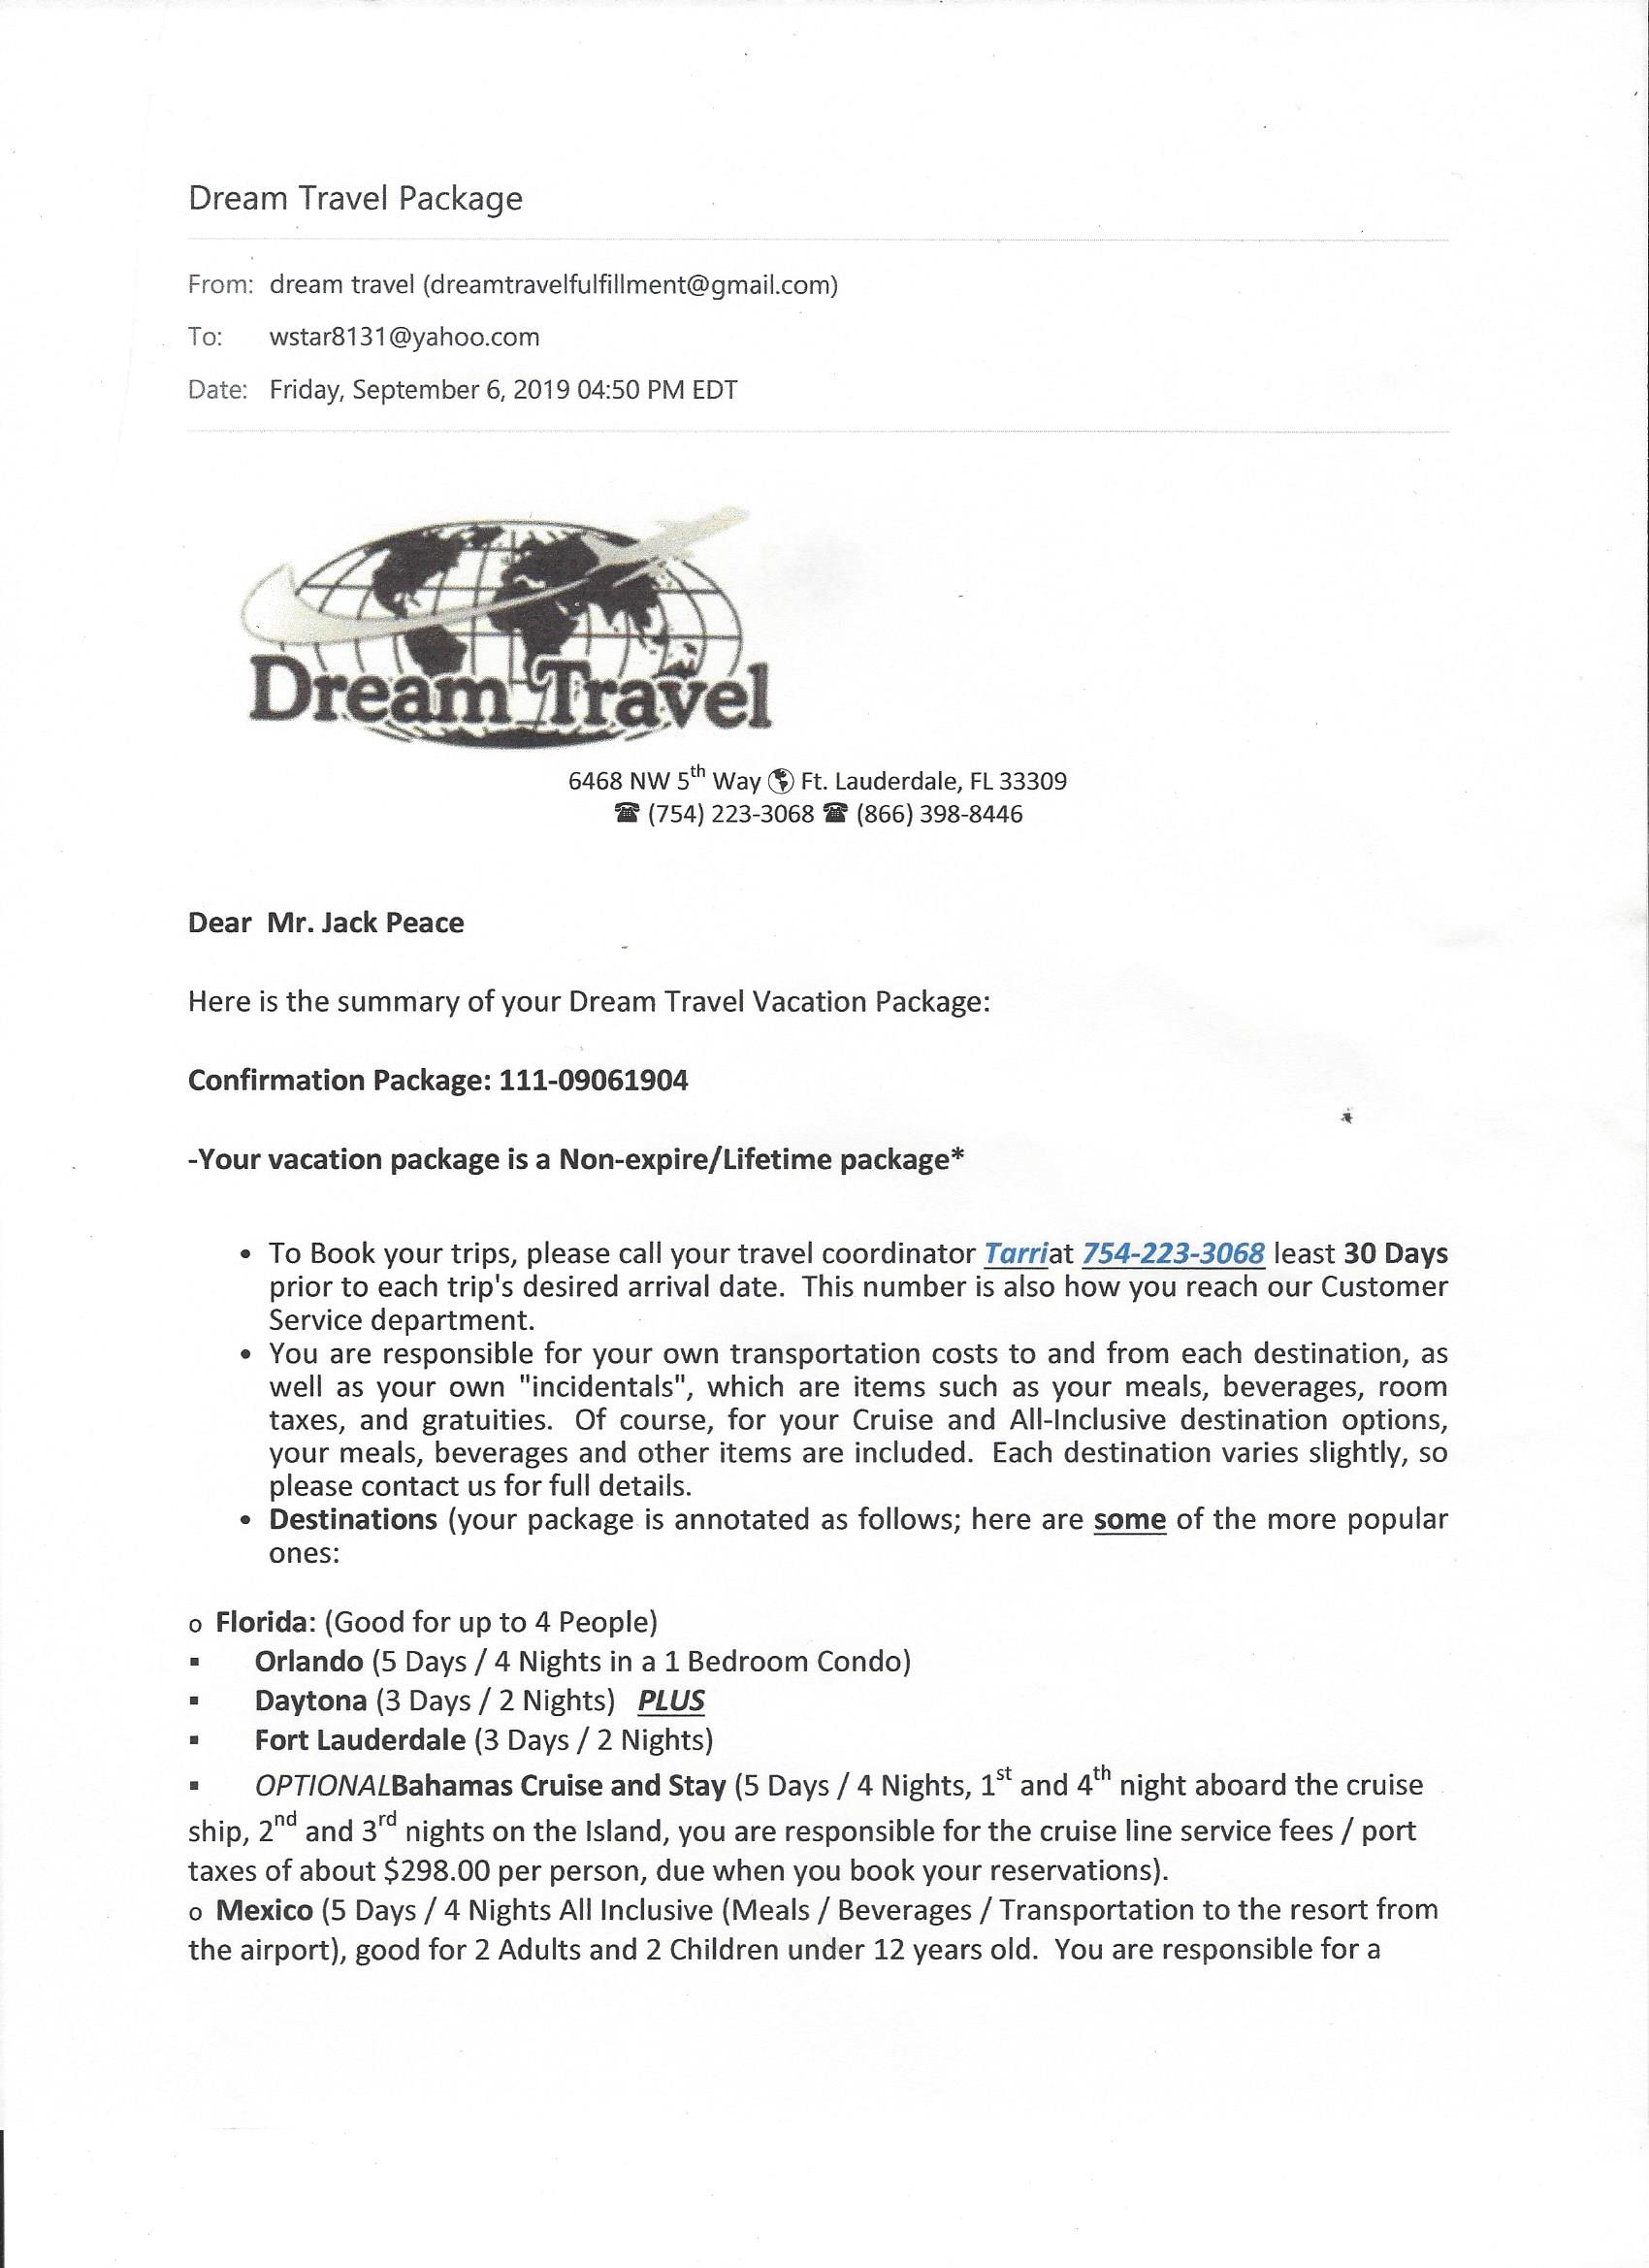 Dream Travel Agreement